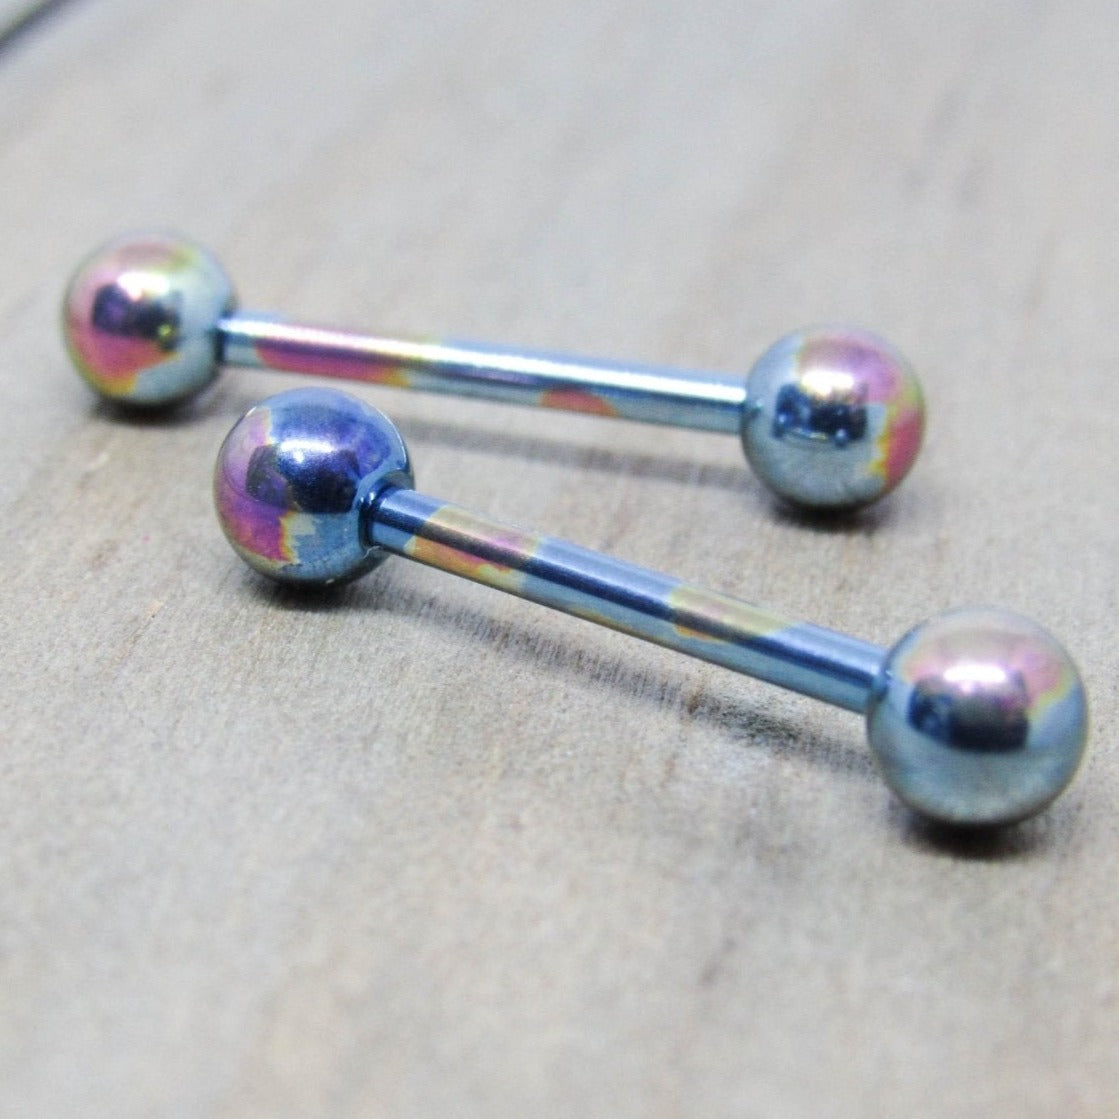 14g Oilslick anodized titanium nipple piercing barbell set internally –  Siren Body Jewelry